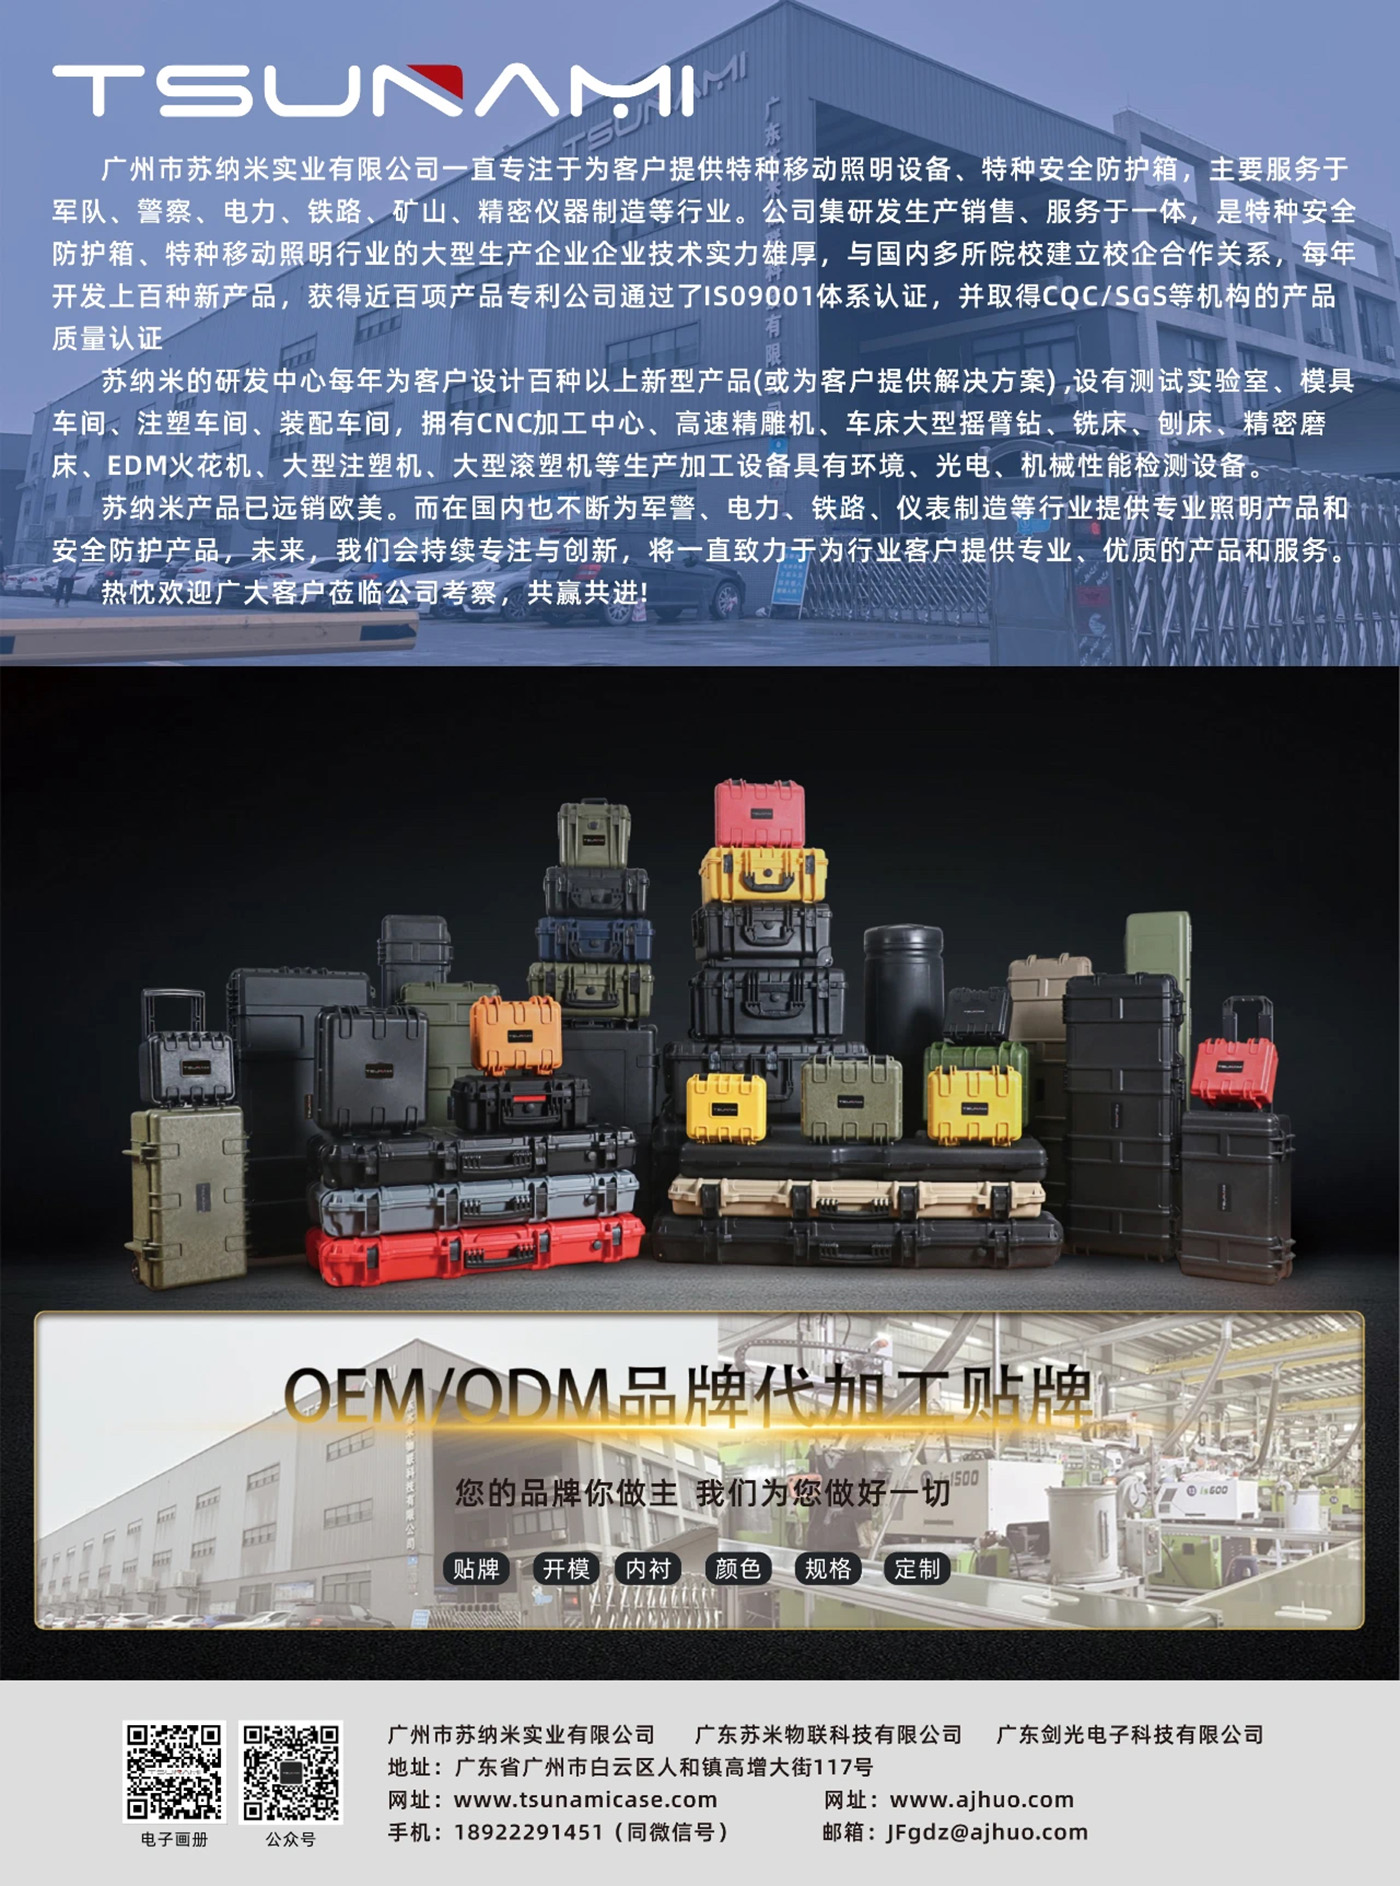 Guangzhou Tsunami Industrial Equipment Co invites you to visit Beijing Station a